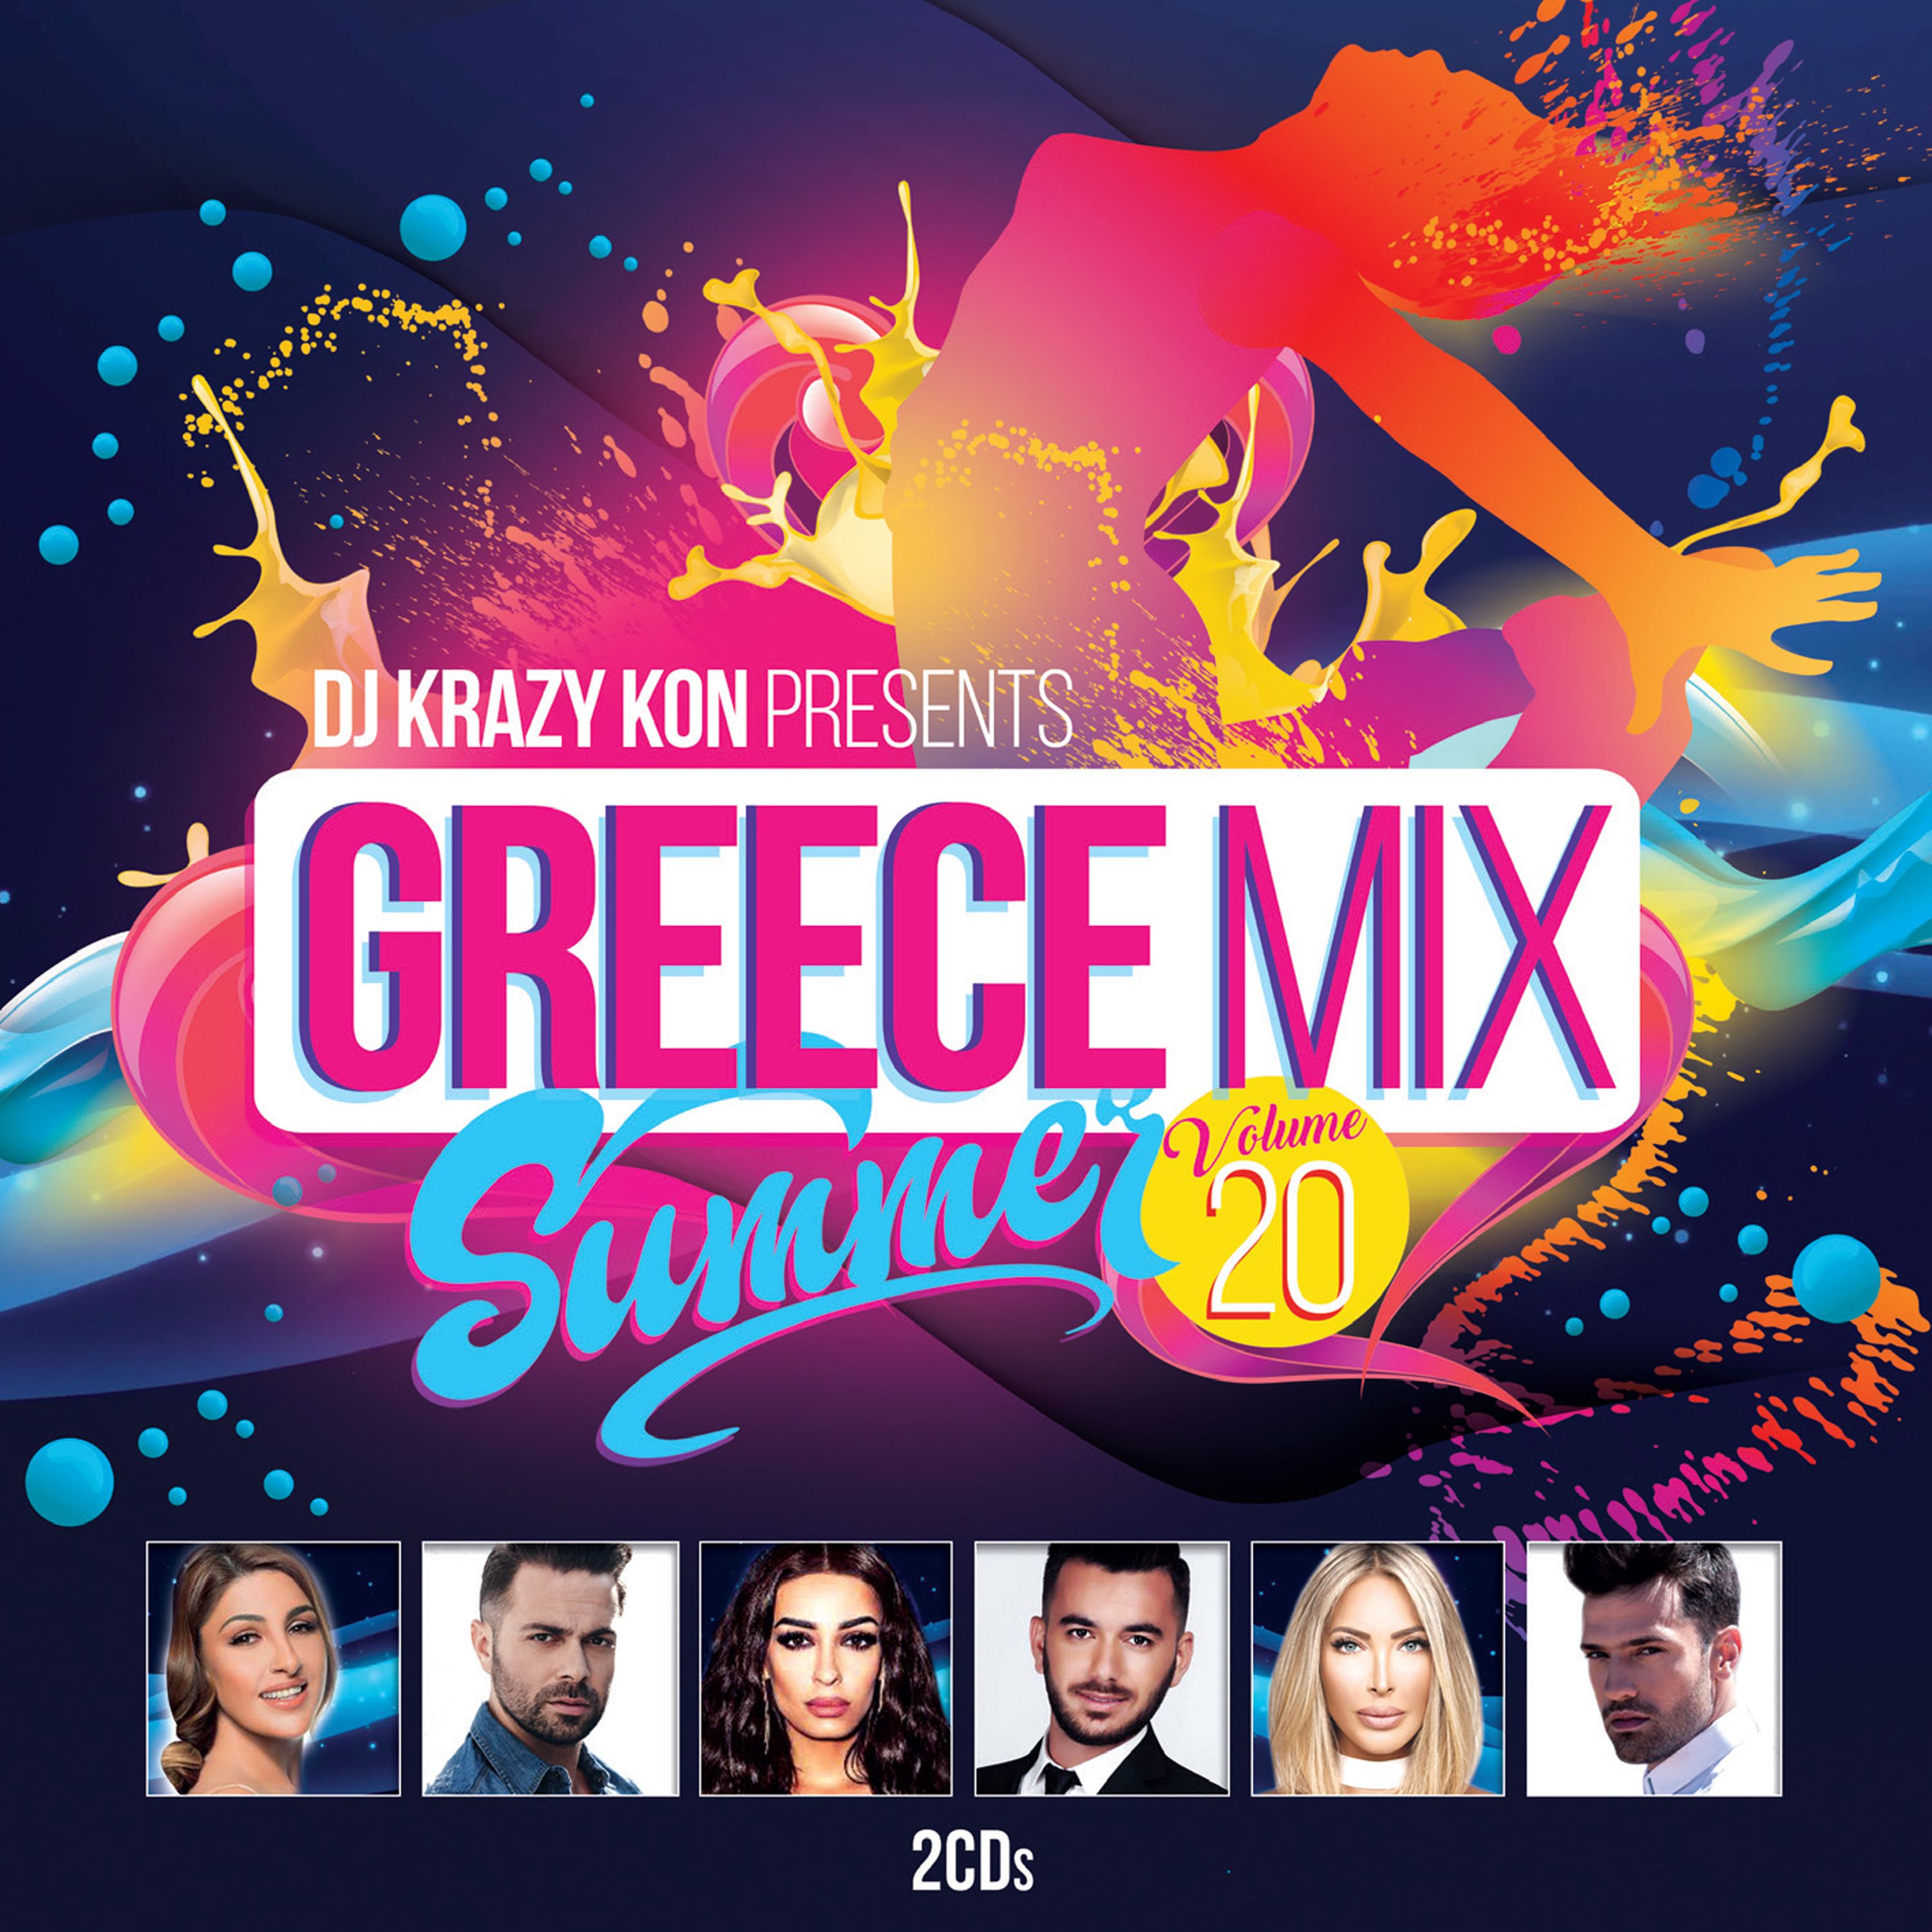 DJ Krazy Kon Presents Greece Mix, Vol. 20